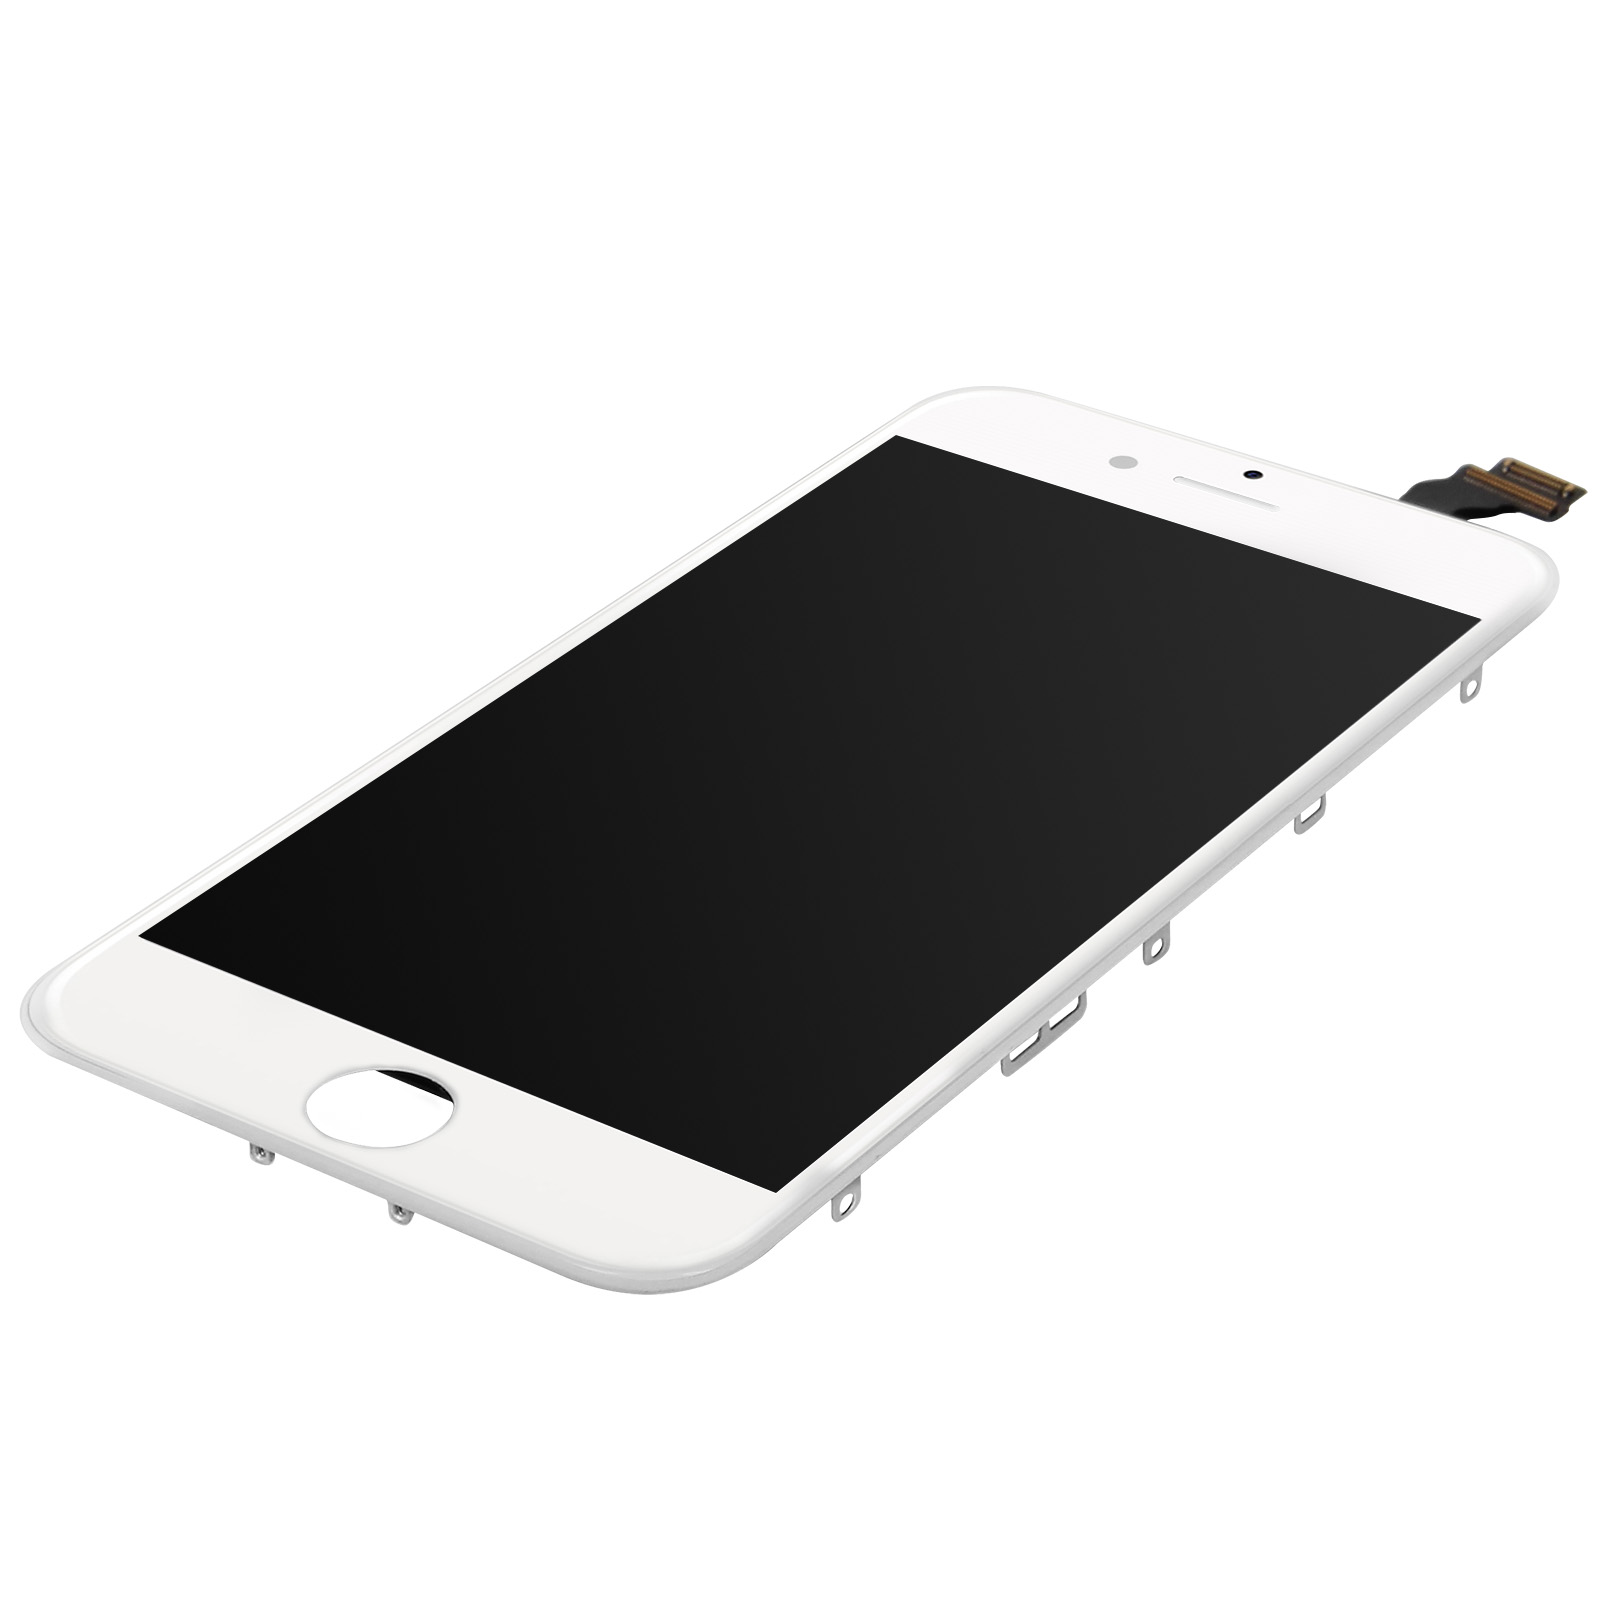 Avizar Ecran LCD + Vitre Tactile Complet Remplacement iPhone 7